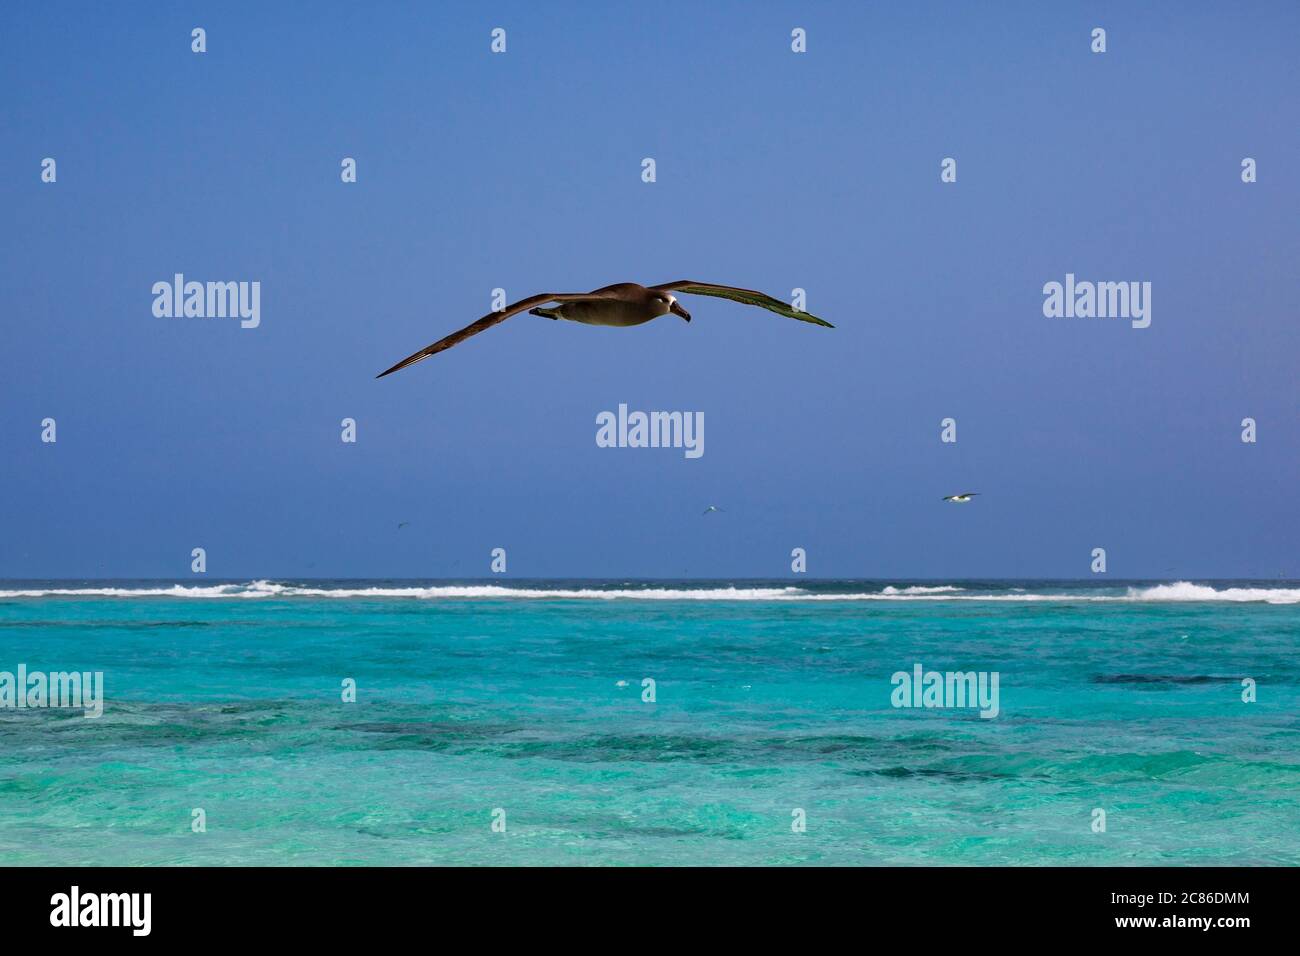 Albatross dai piedi neri, nigripi di Phoebastria, che sorvolano la laguna a Sand Island, Atoll Midway, Rifugio Nazionale Faunistico Midway, Papahanaumokuakea MNM Foto Stock